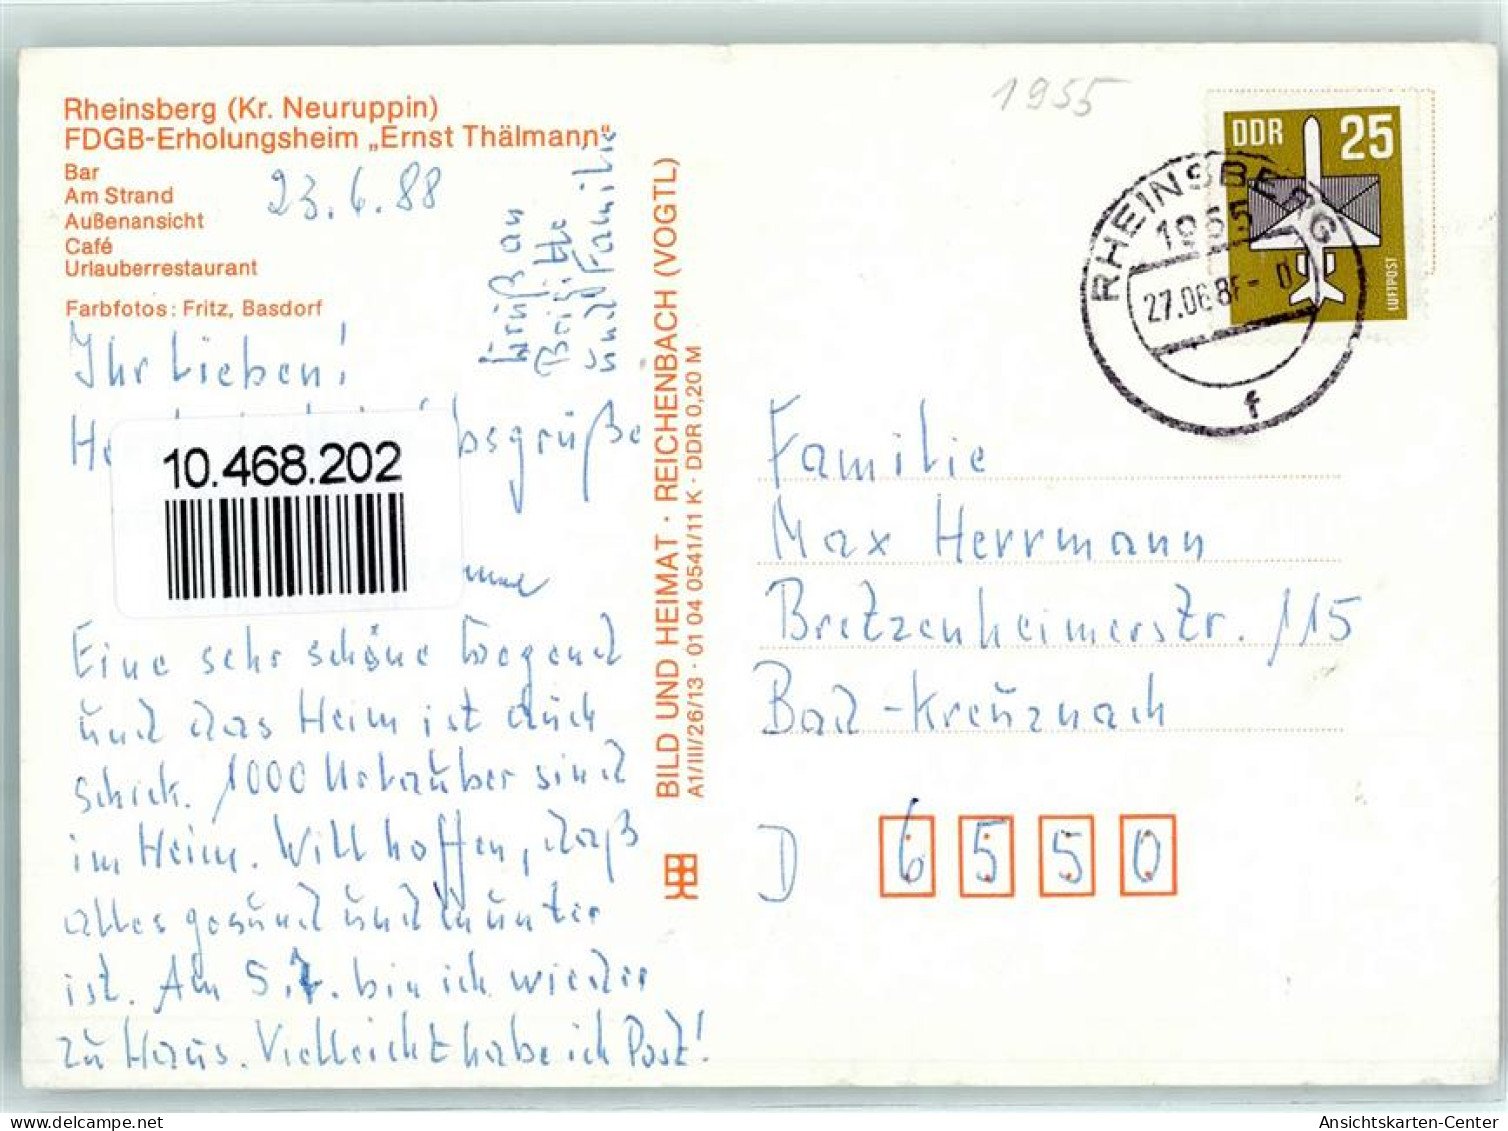 10468202 - Rheinsberg - Zechlinerhütte